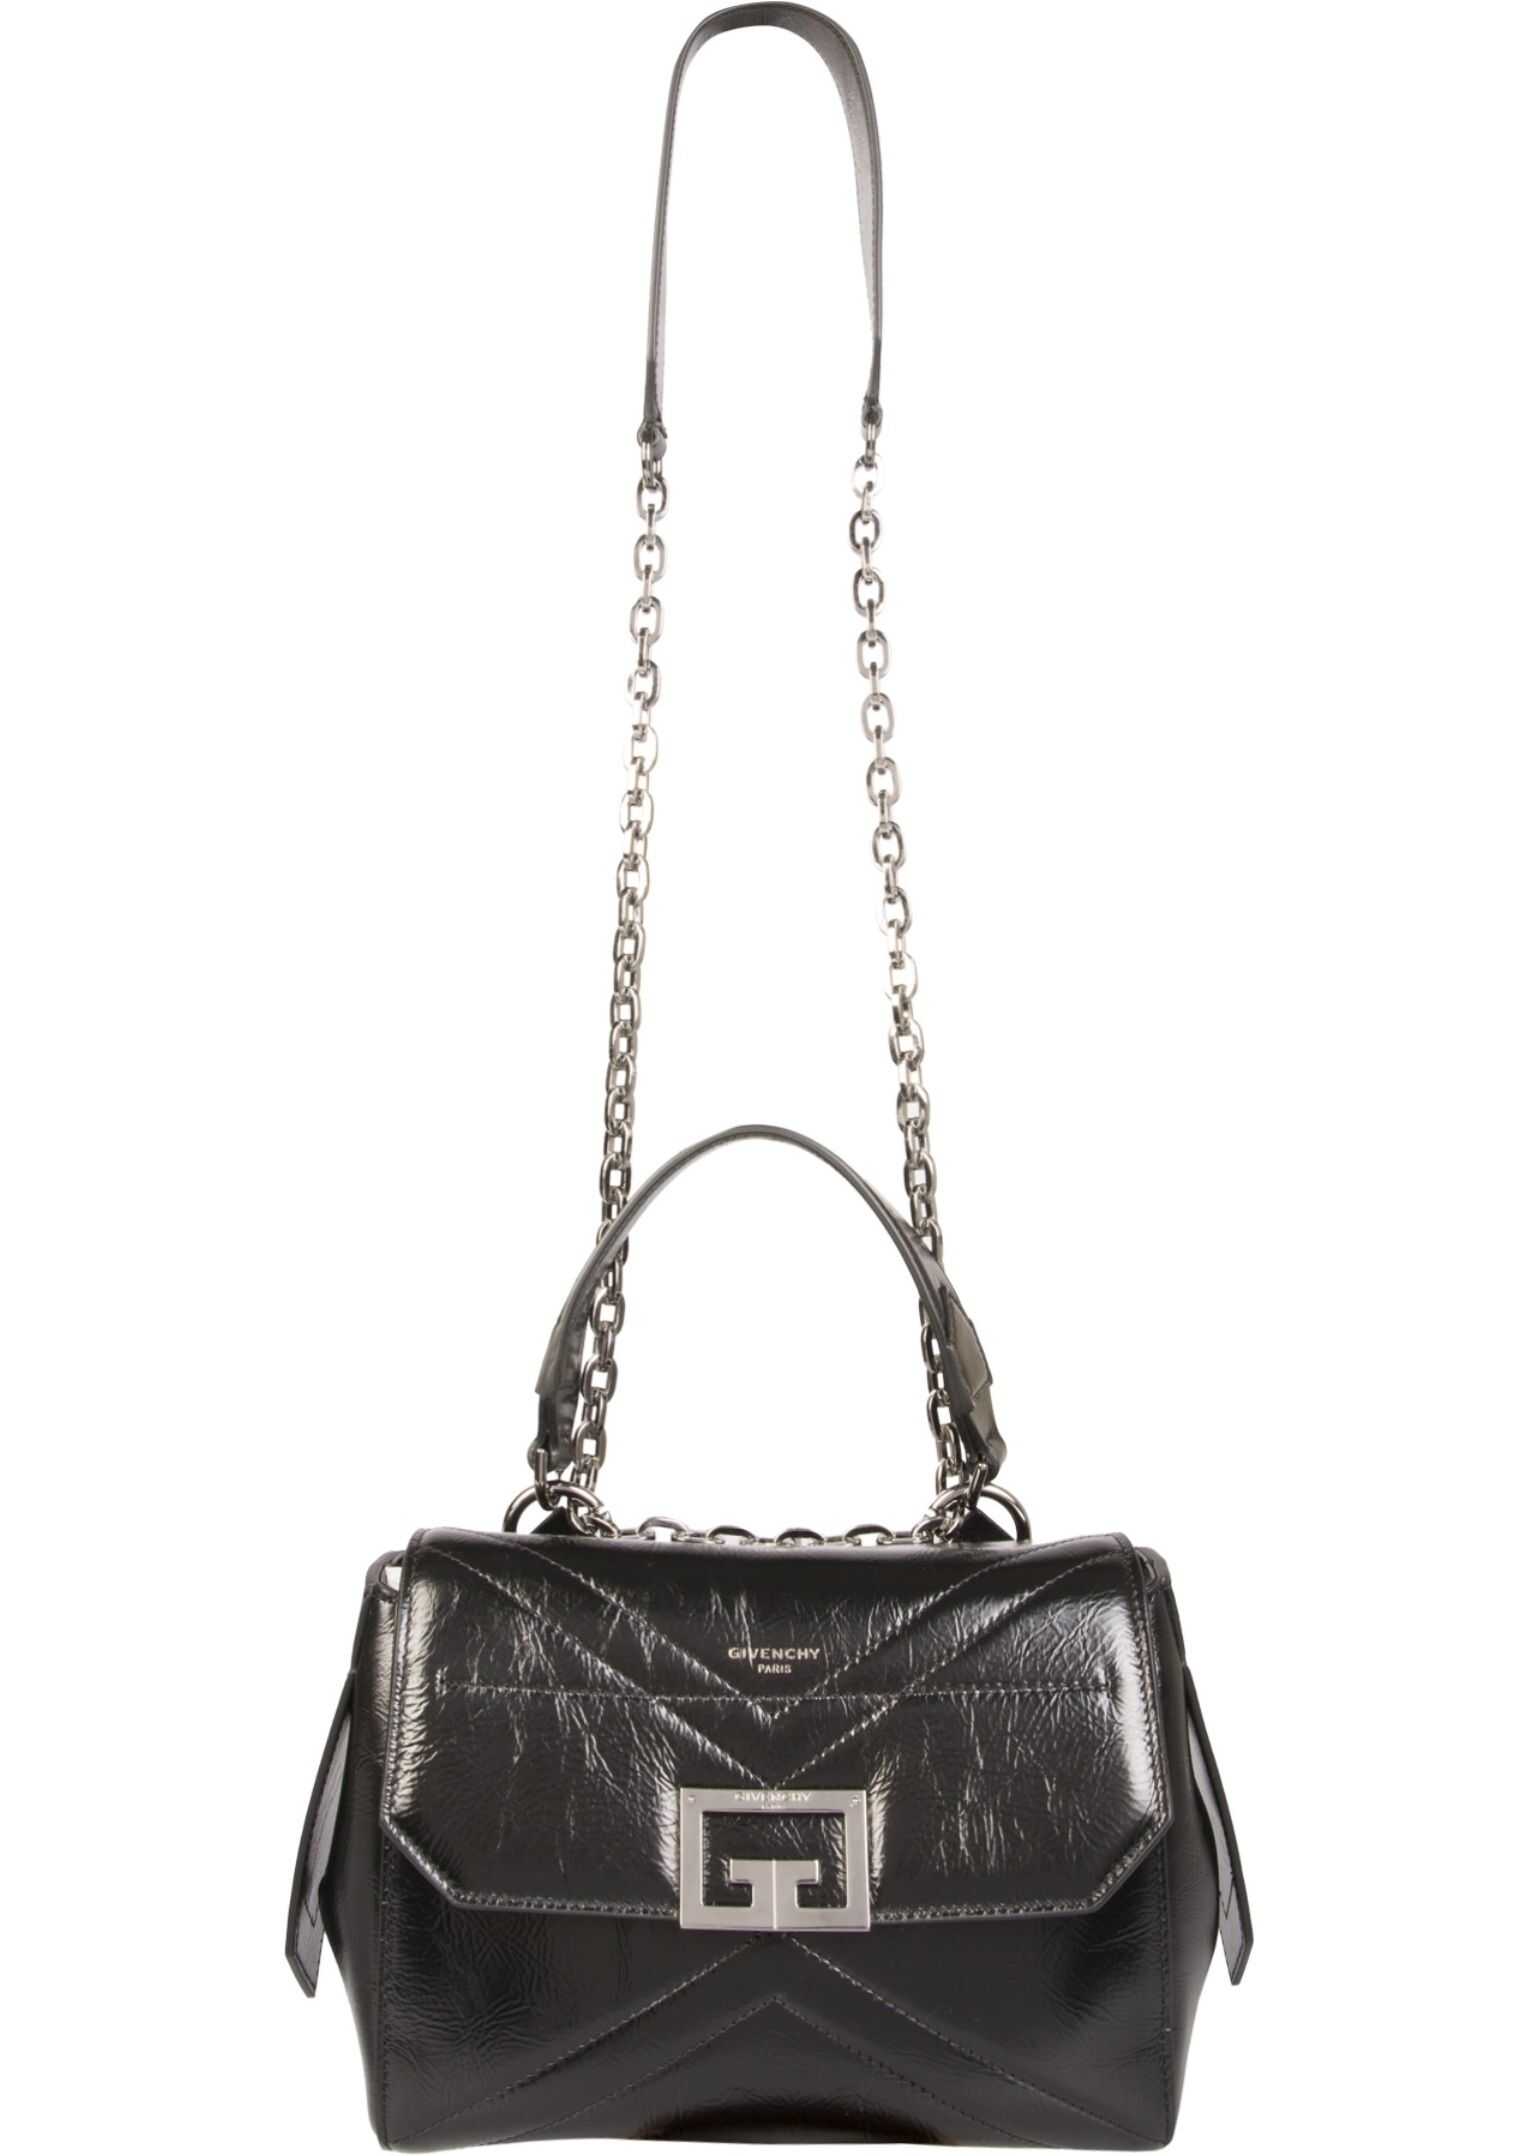 Givenchy Small Id Bag BLACK